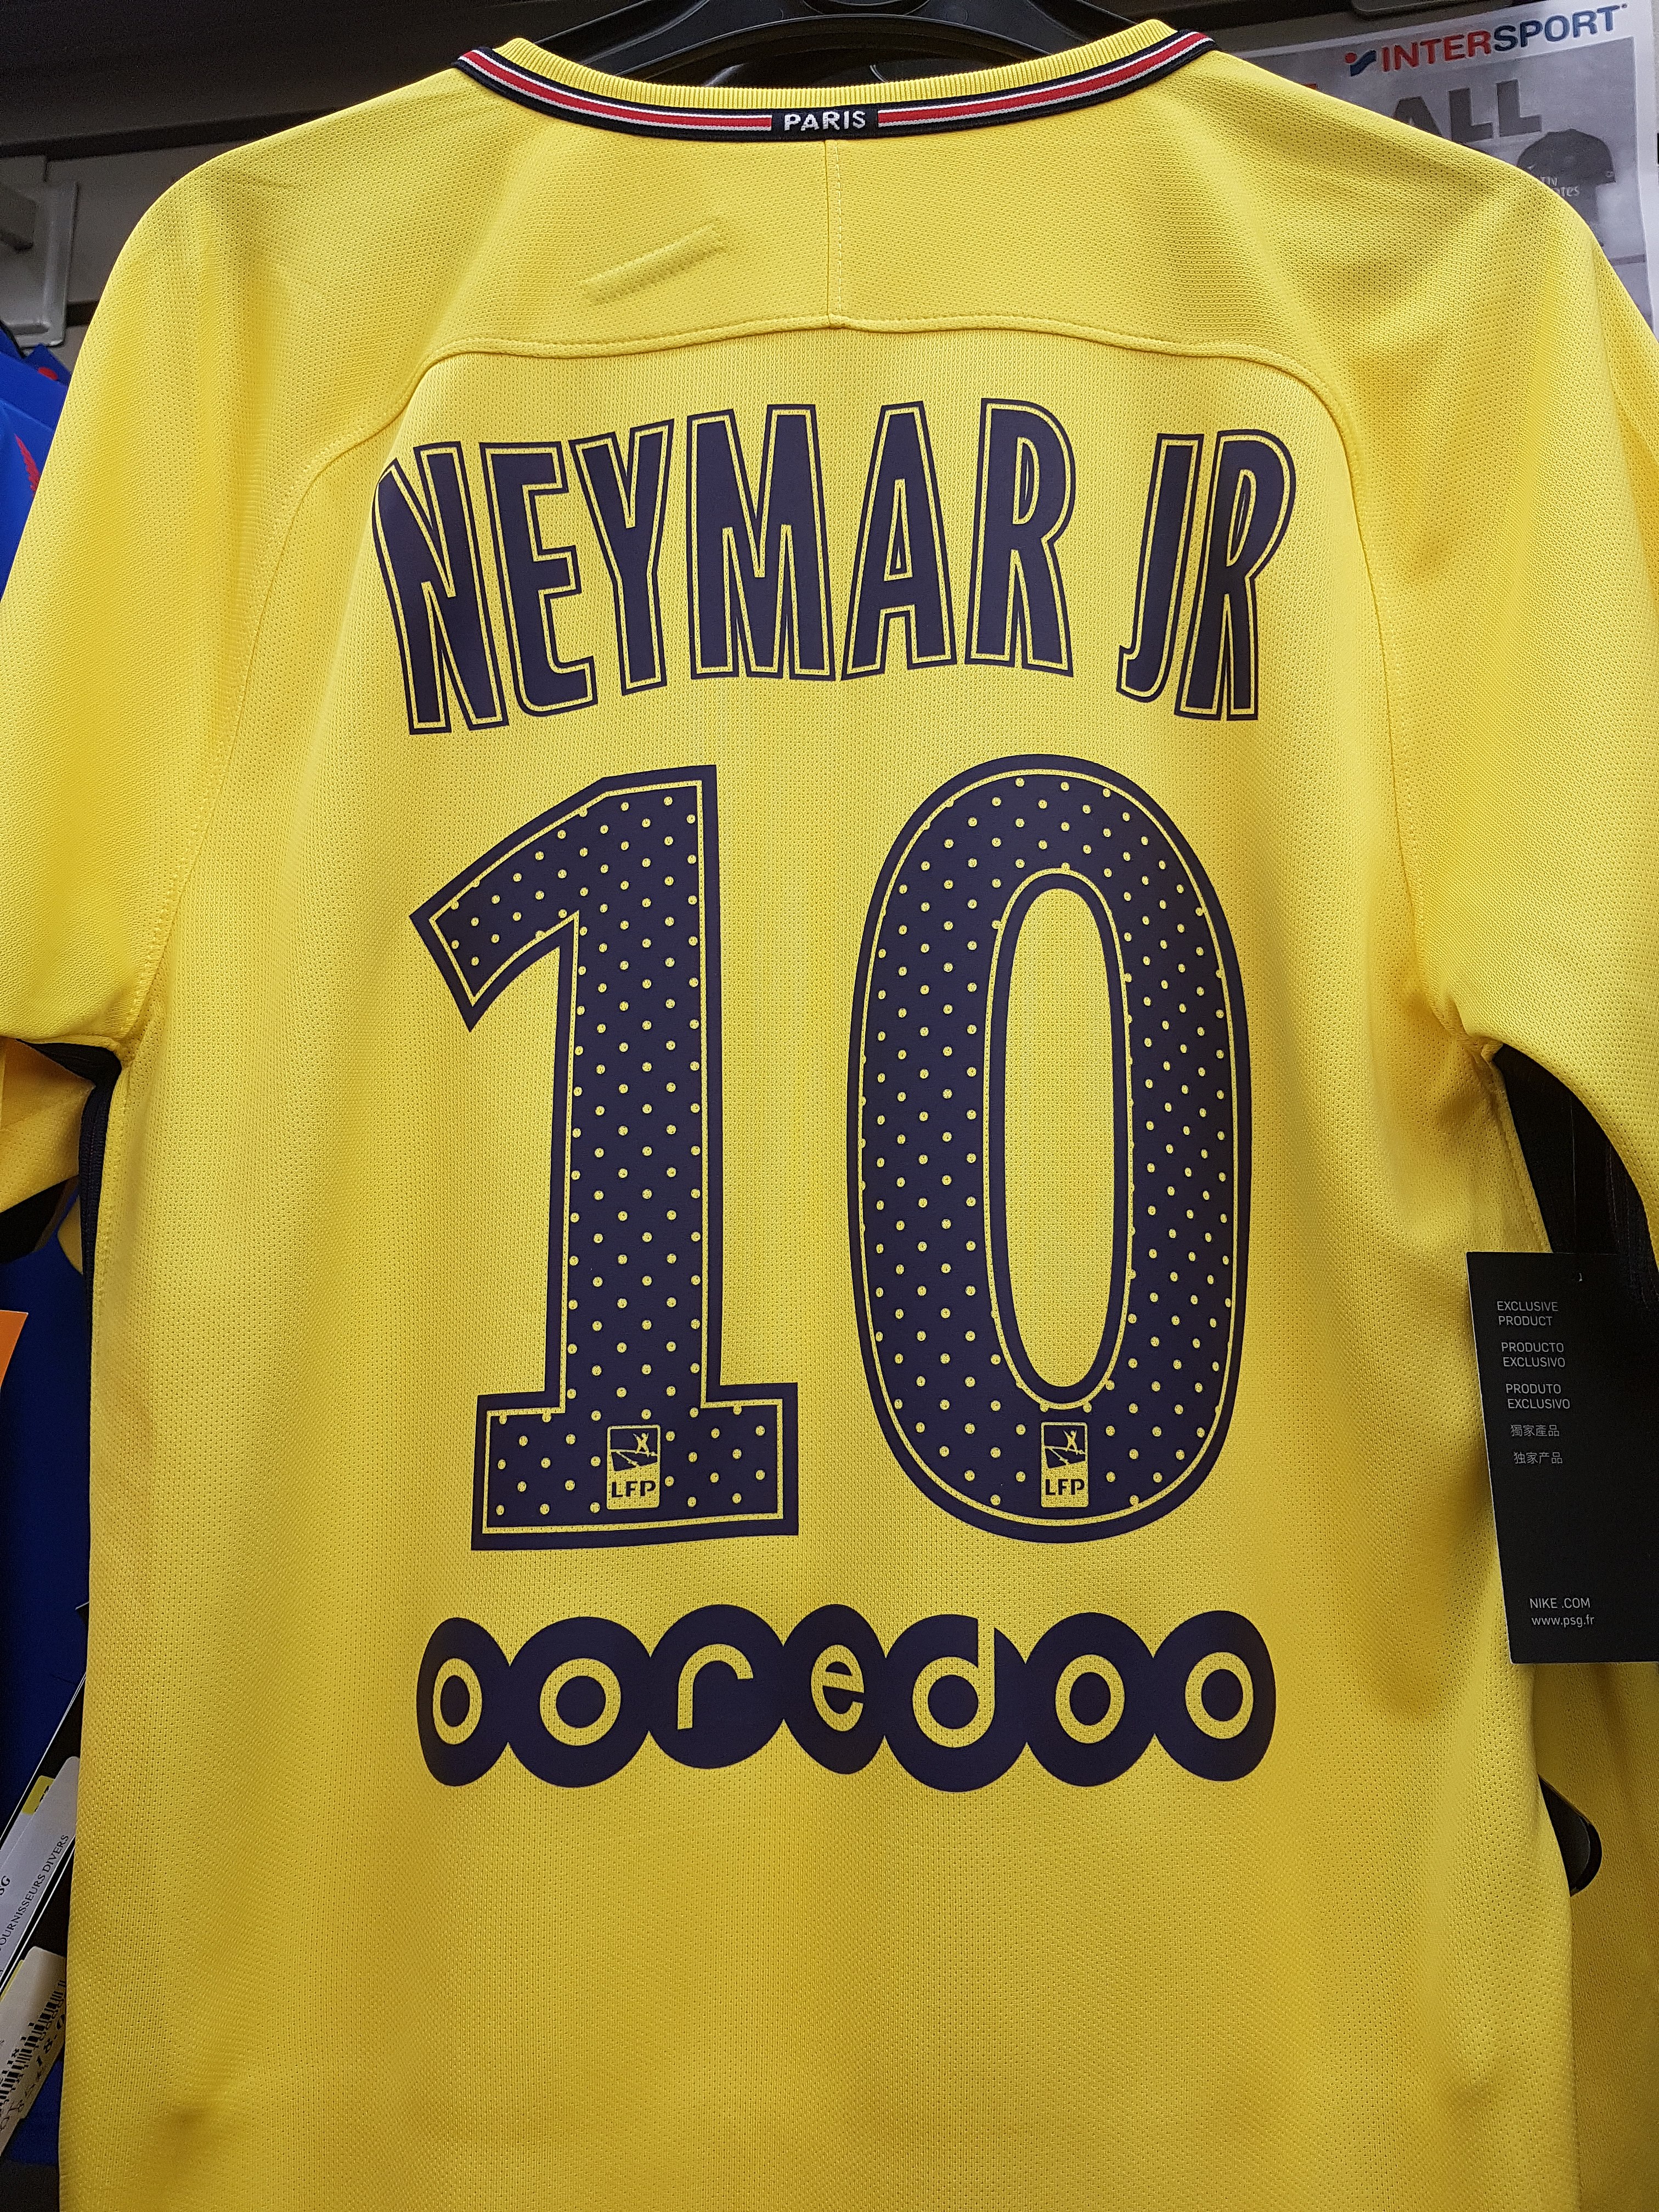 File:Maillot extérieur PSG 2017-2018 Neymar JR.jpg - Wikimedia Commons